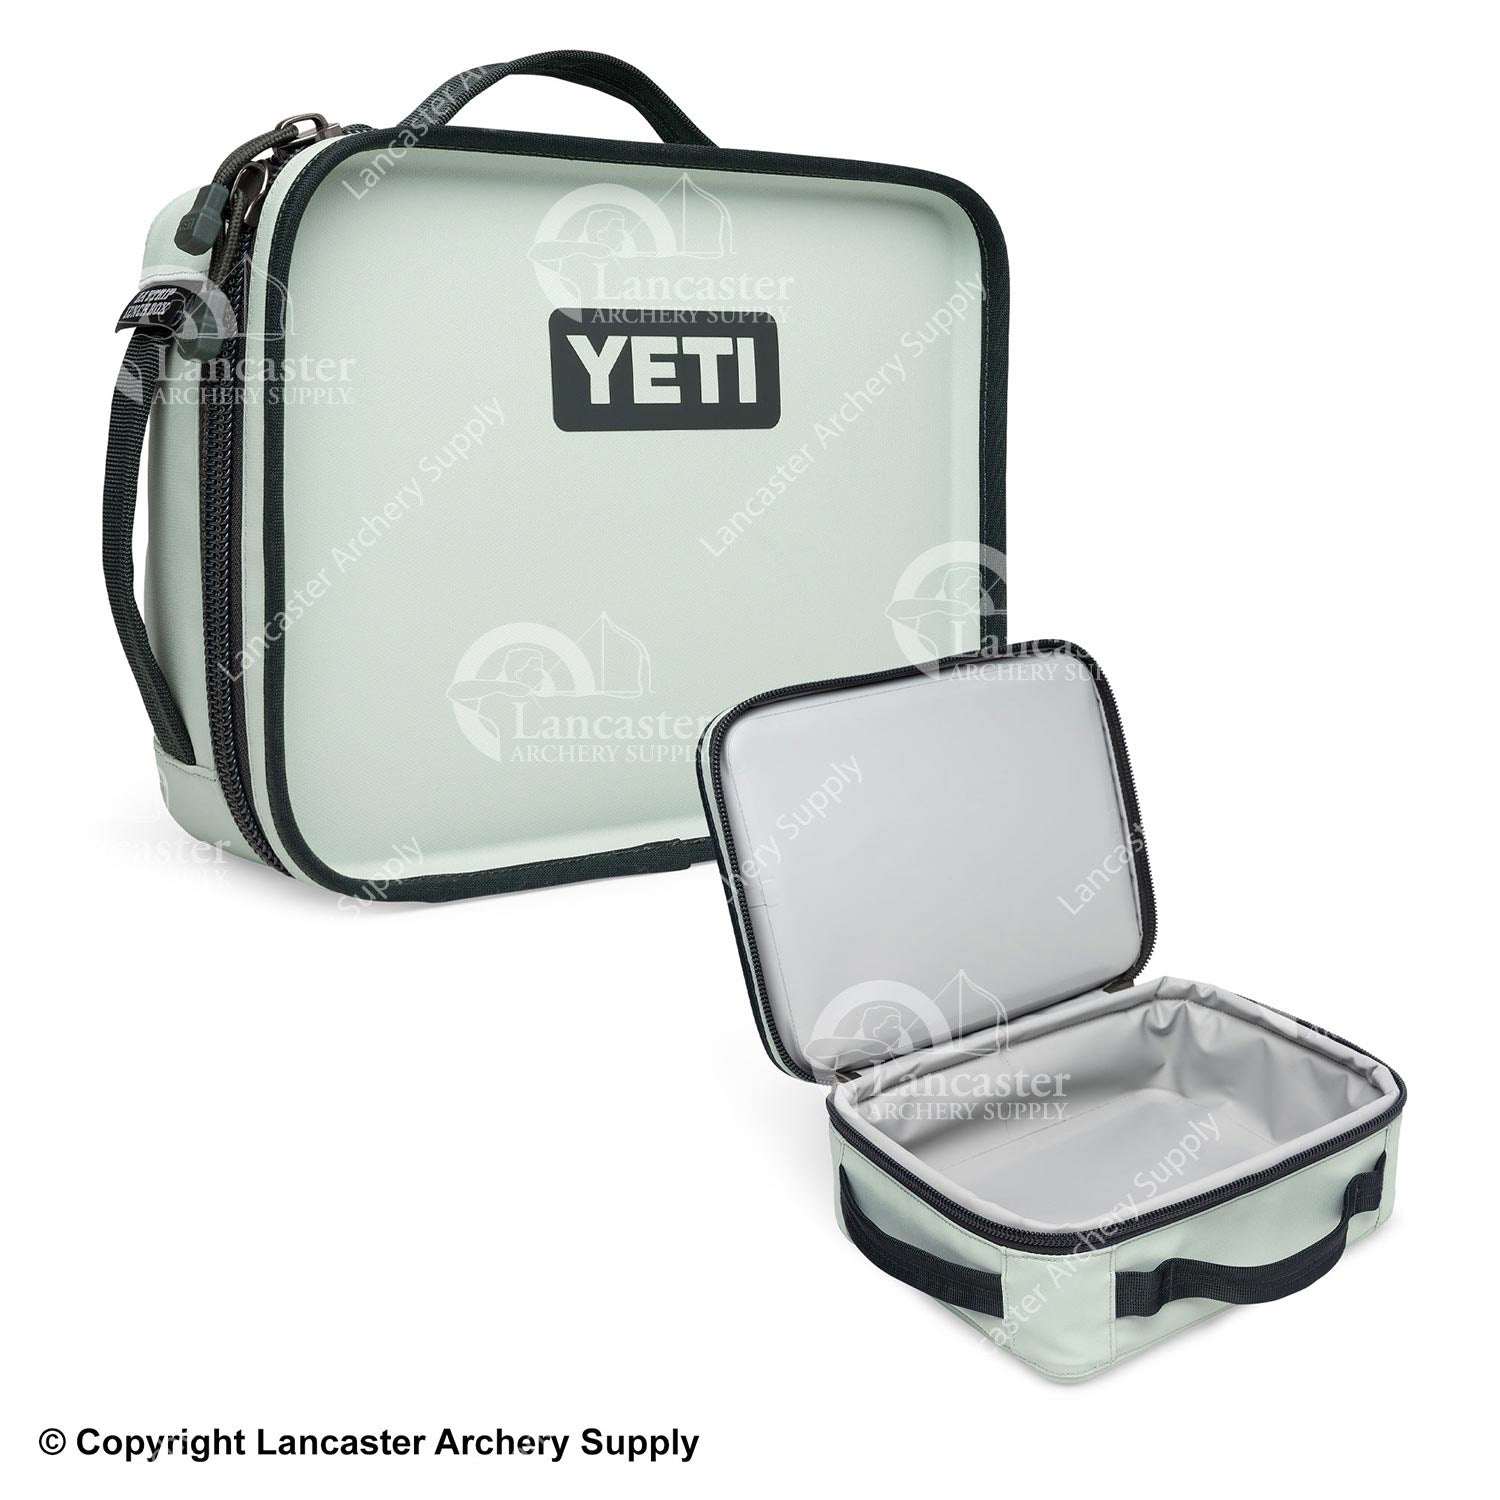 YETI Daytrip Lunch Box (Sagebrush Green Limited Edition